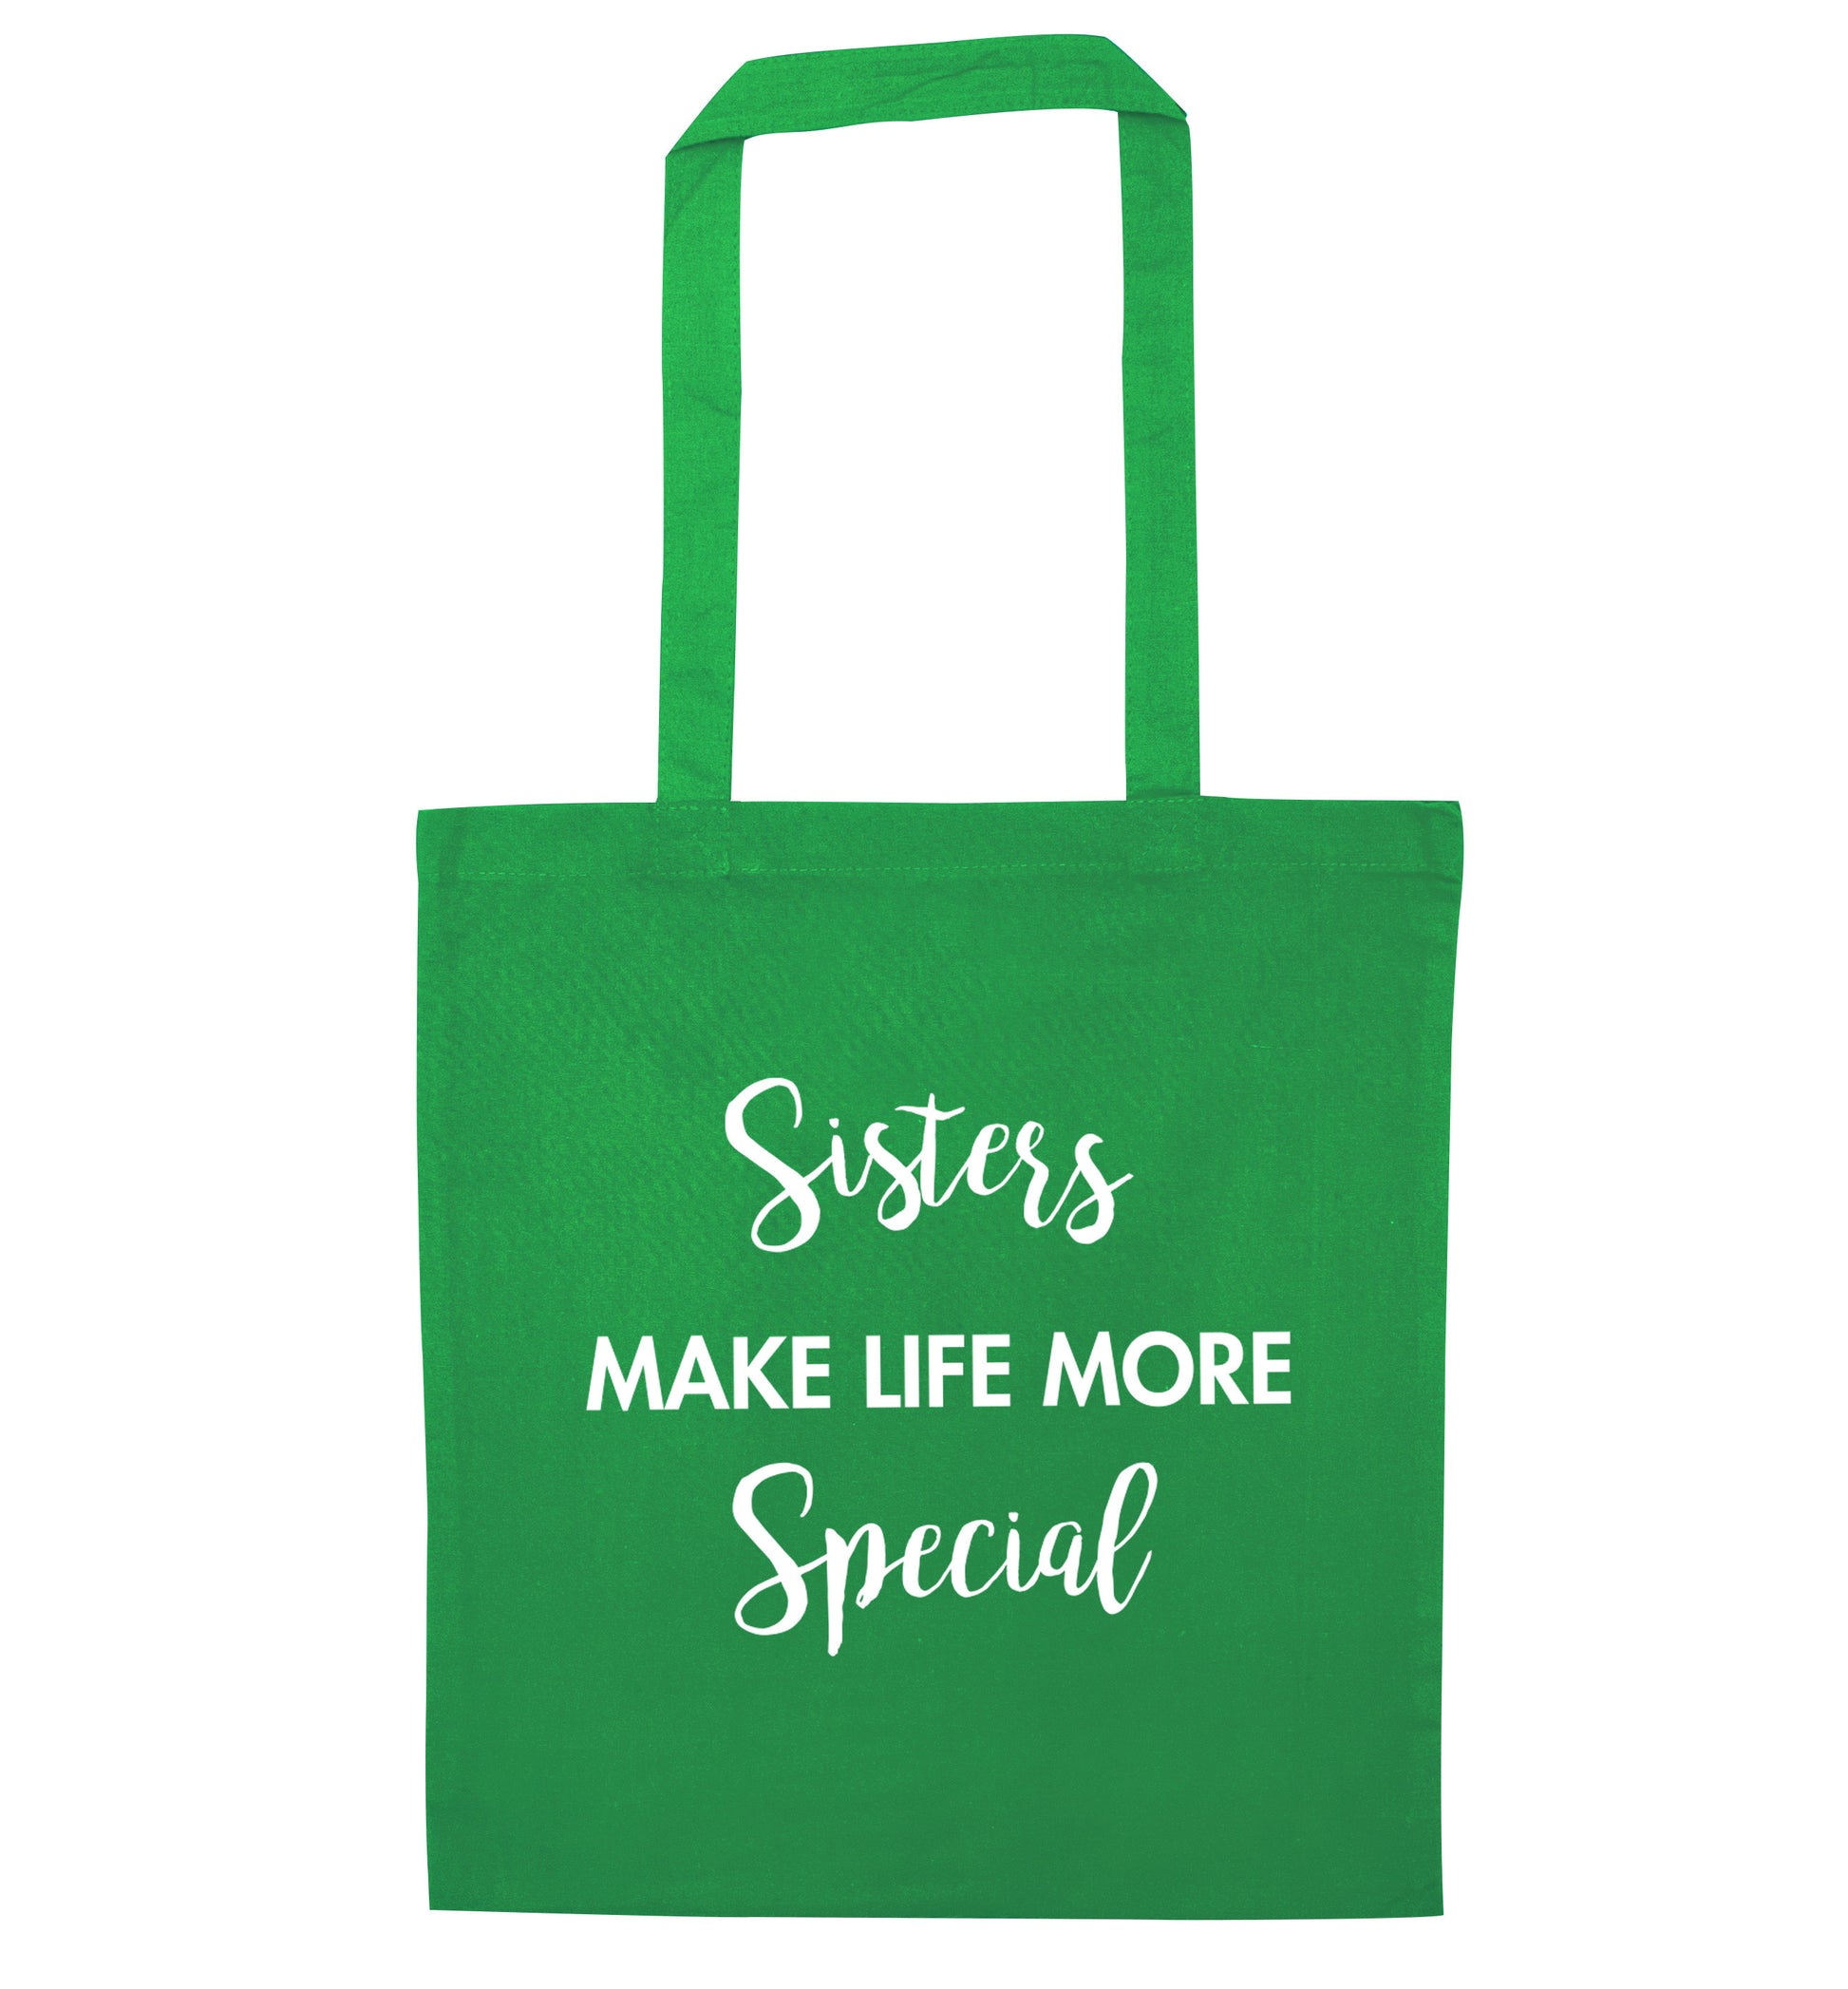 Sisters make life more special green tote bag